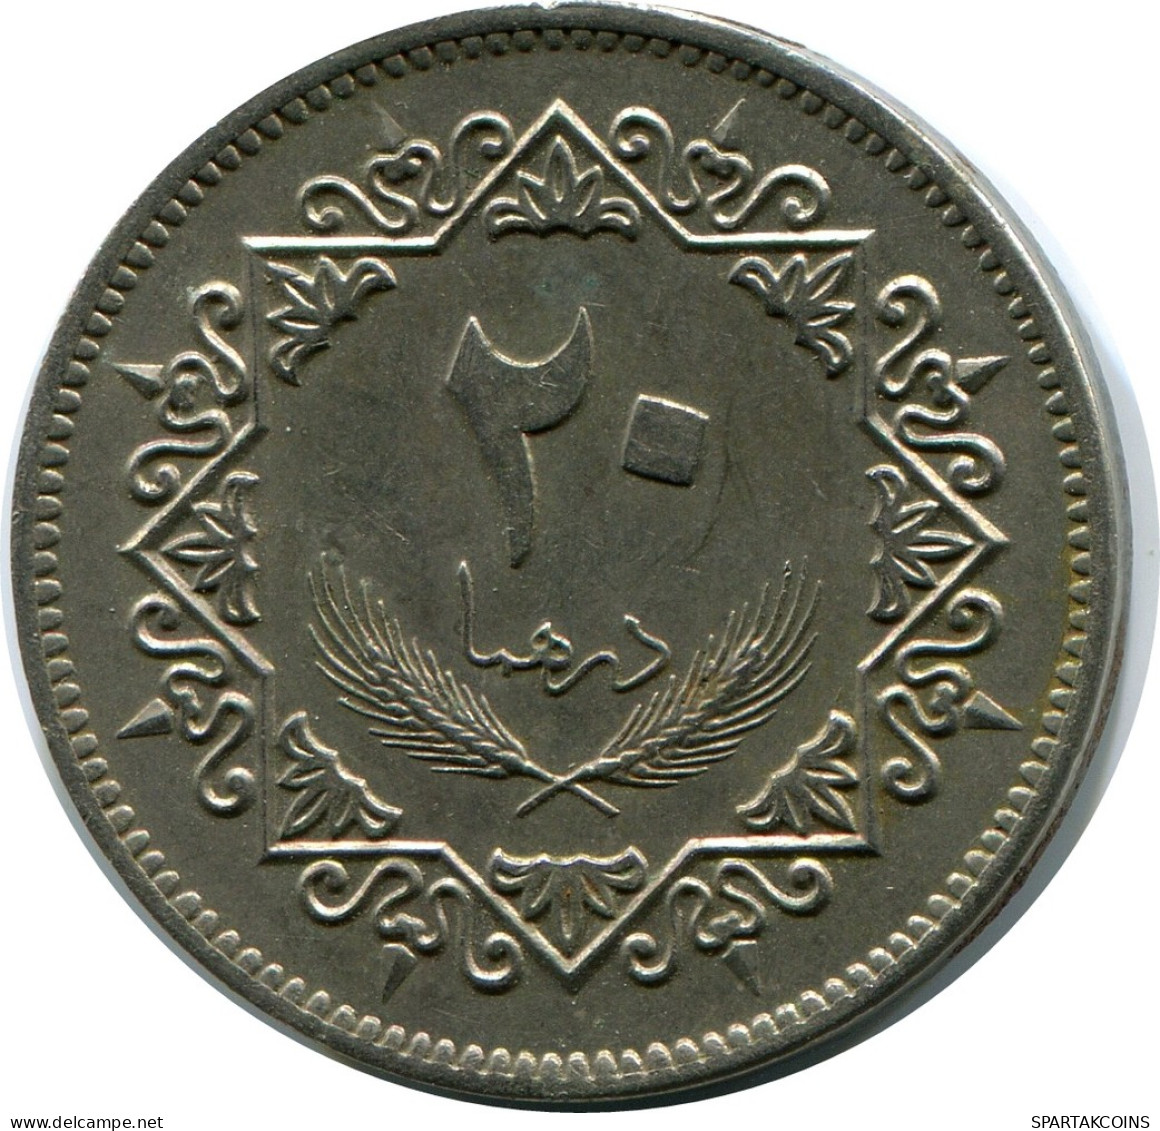 20 DIRHAMS 1975 LIBIA LIBYA Islámico Moneda #AH615.3.E - Libya